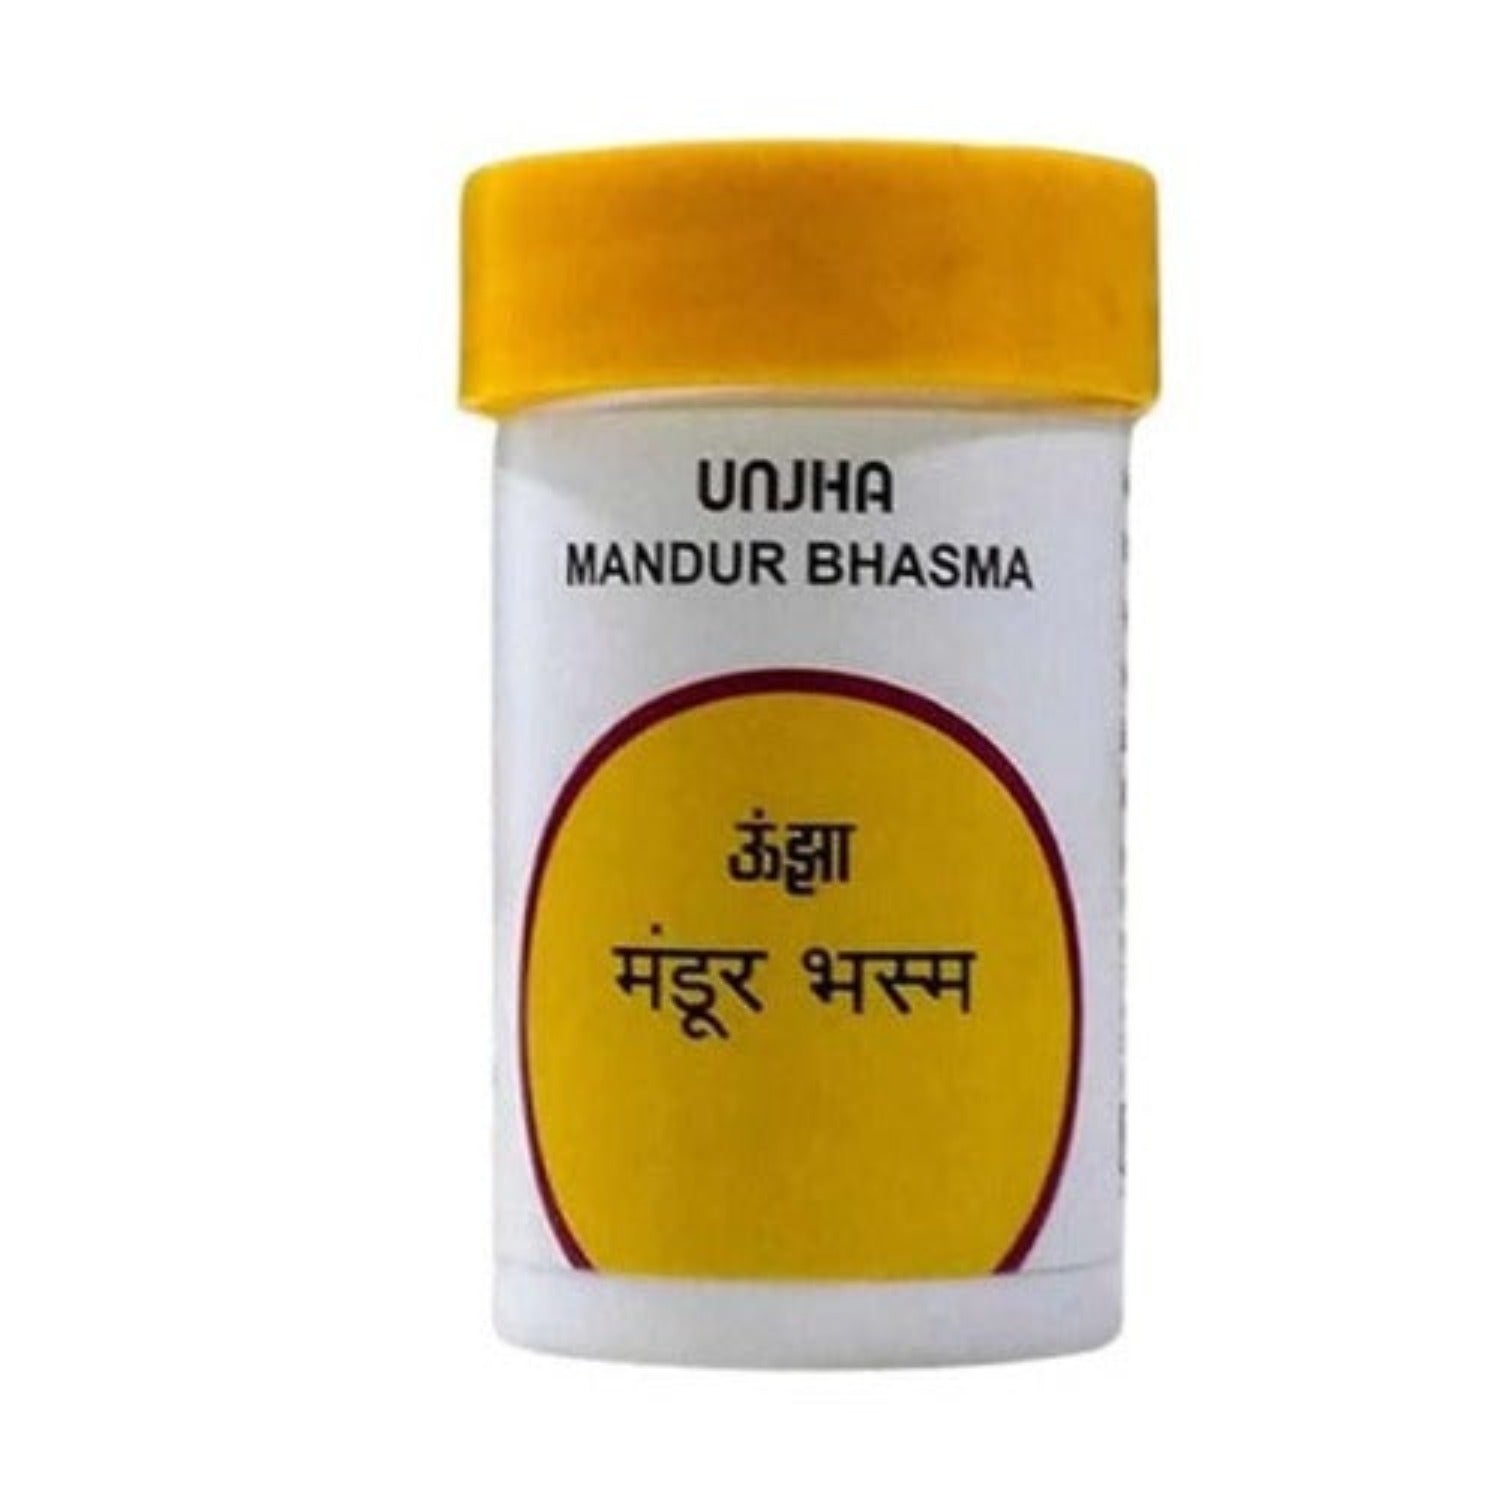 Unjha Ayurvedic Mandur Bhasma Powder